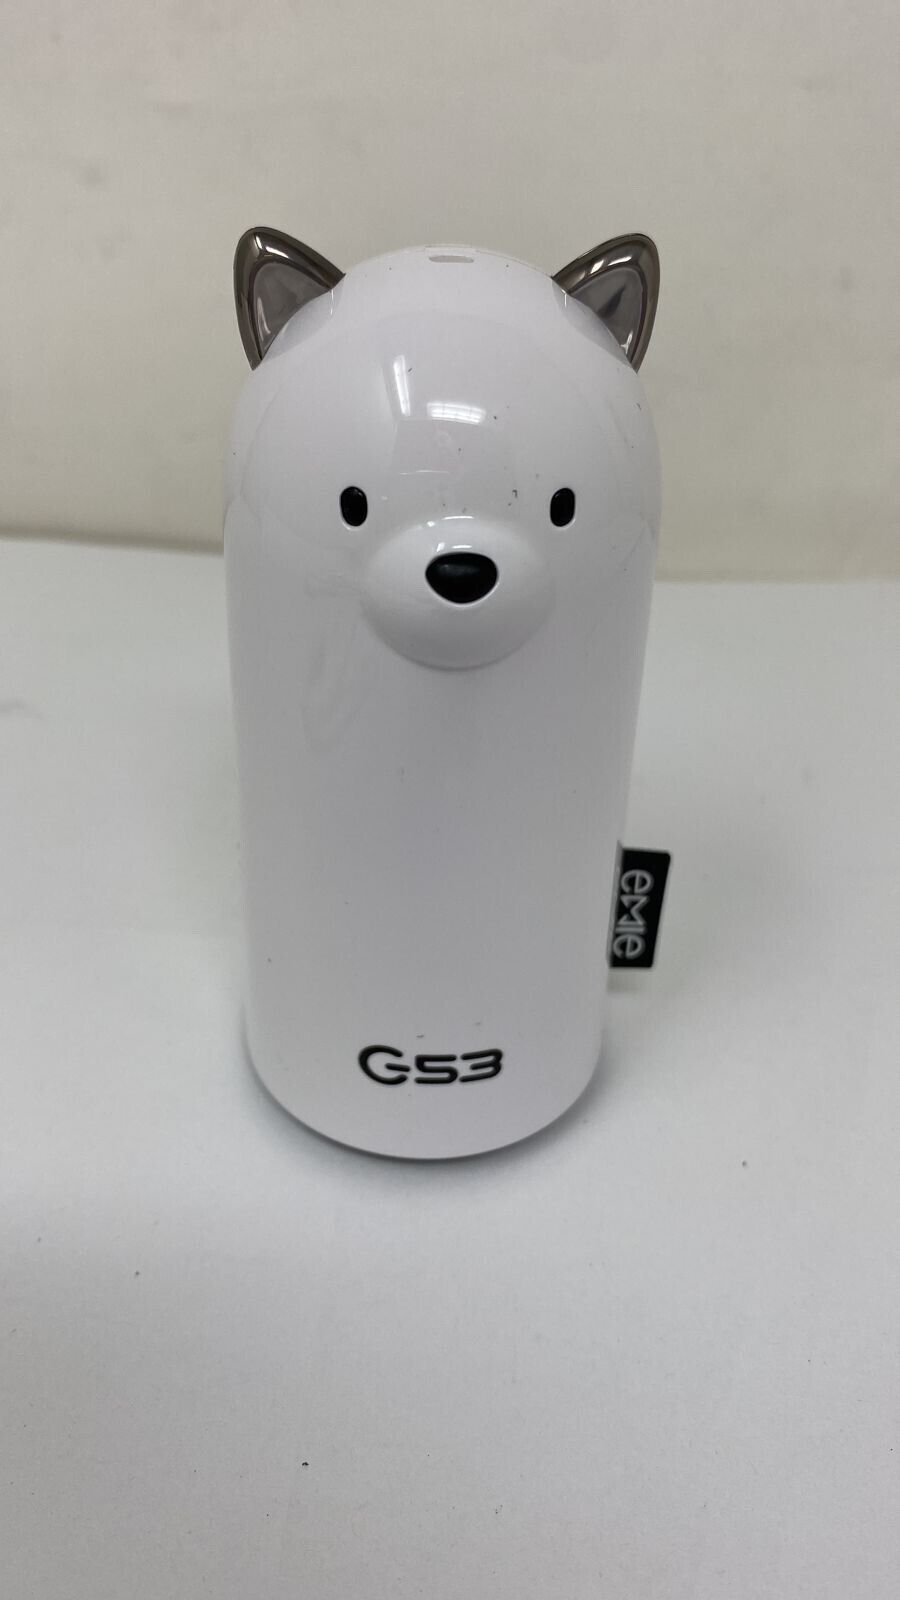 G53 Power Bank Fast Portable Charger 5200 mAh External Battery Fun Bear